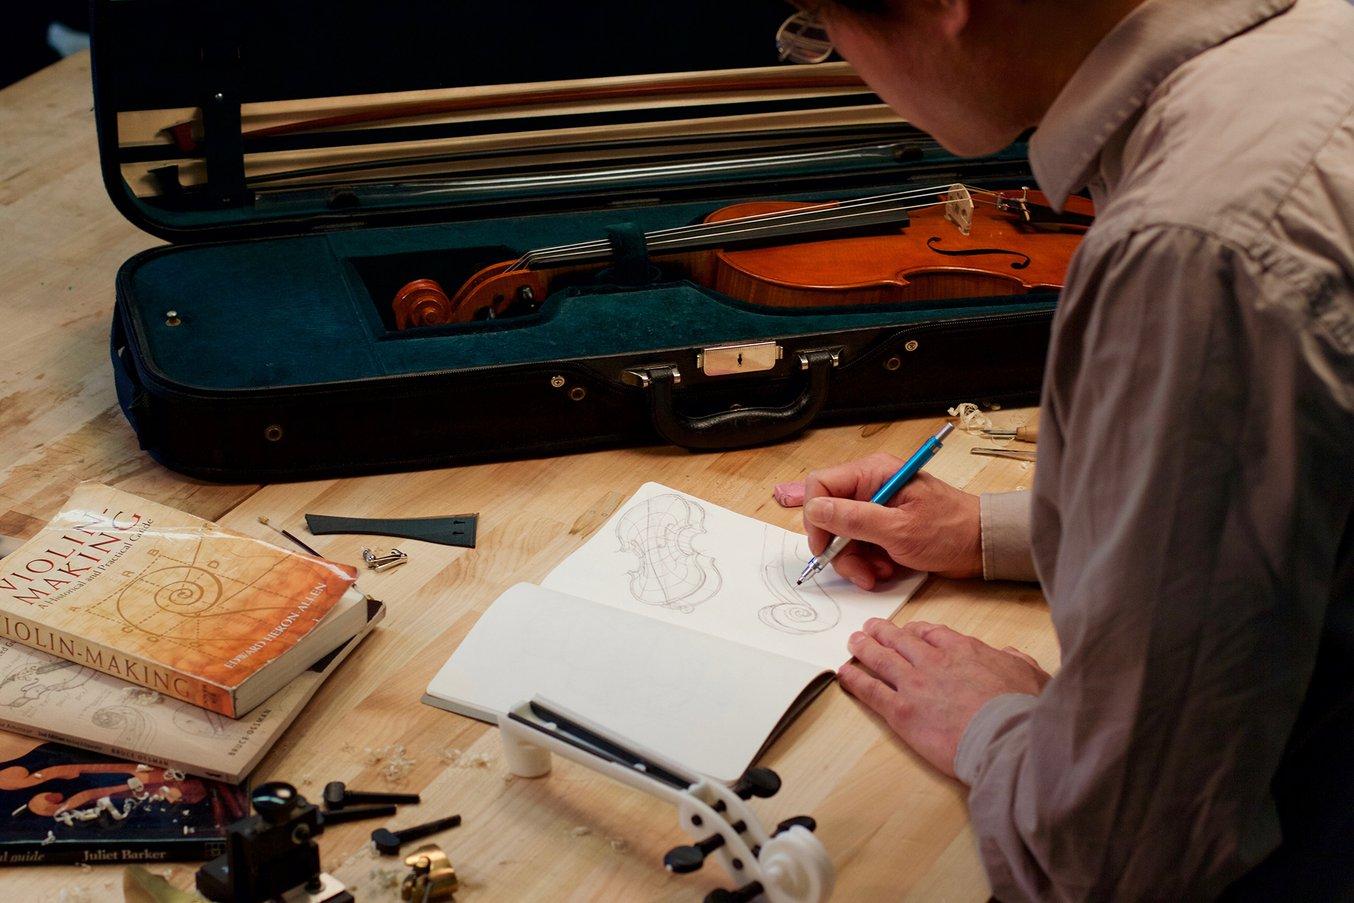 Designing a 3d printed violin